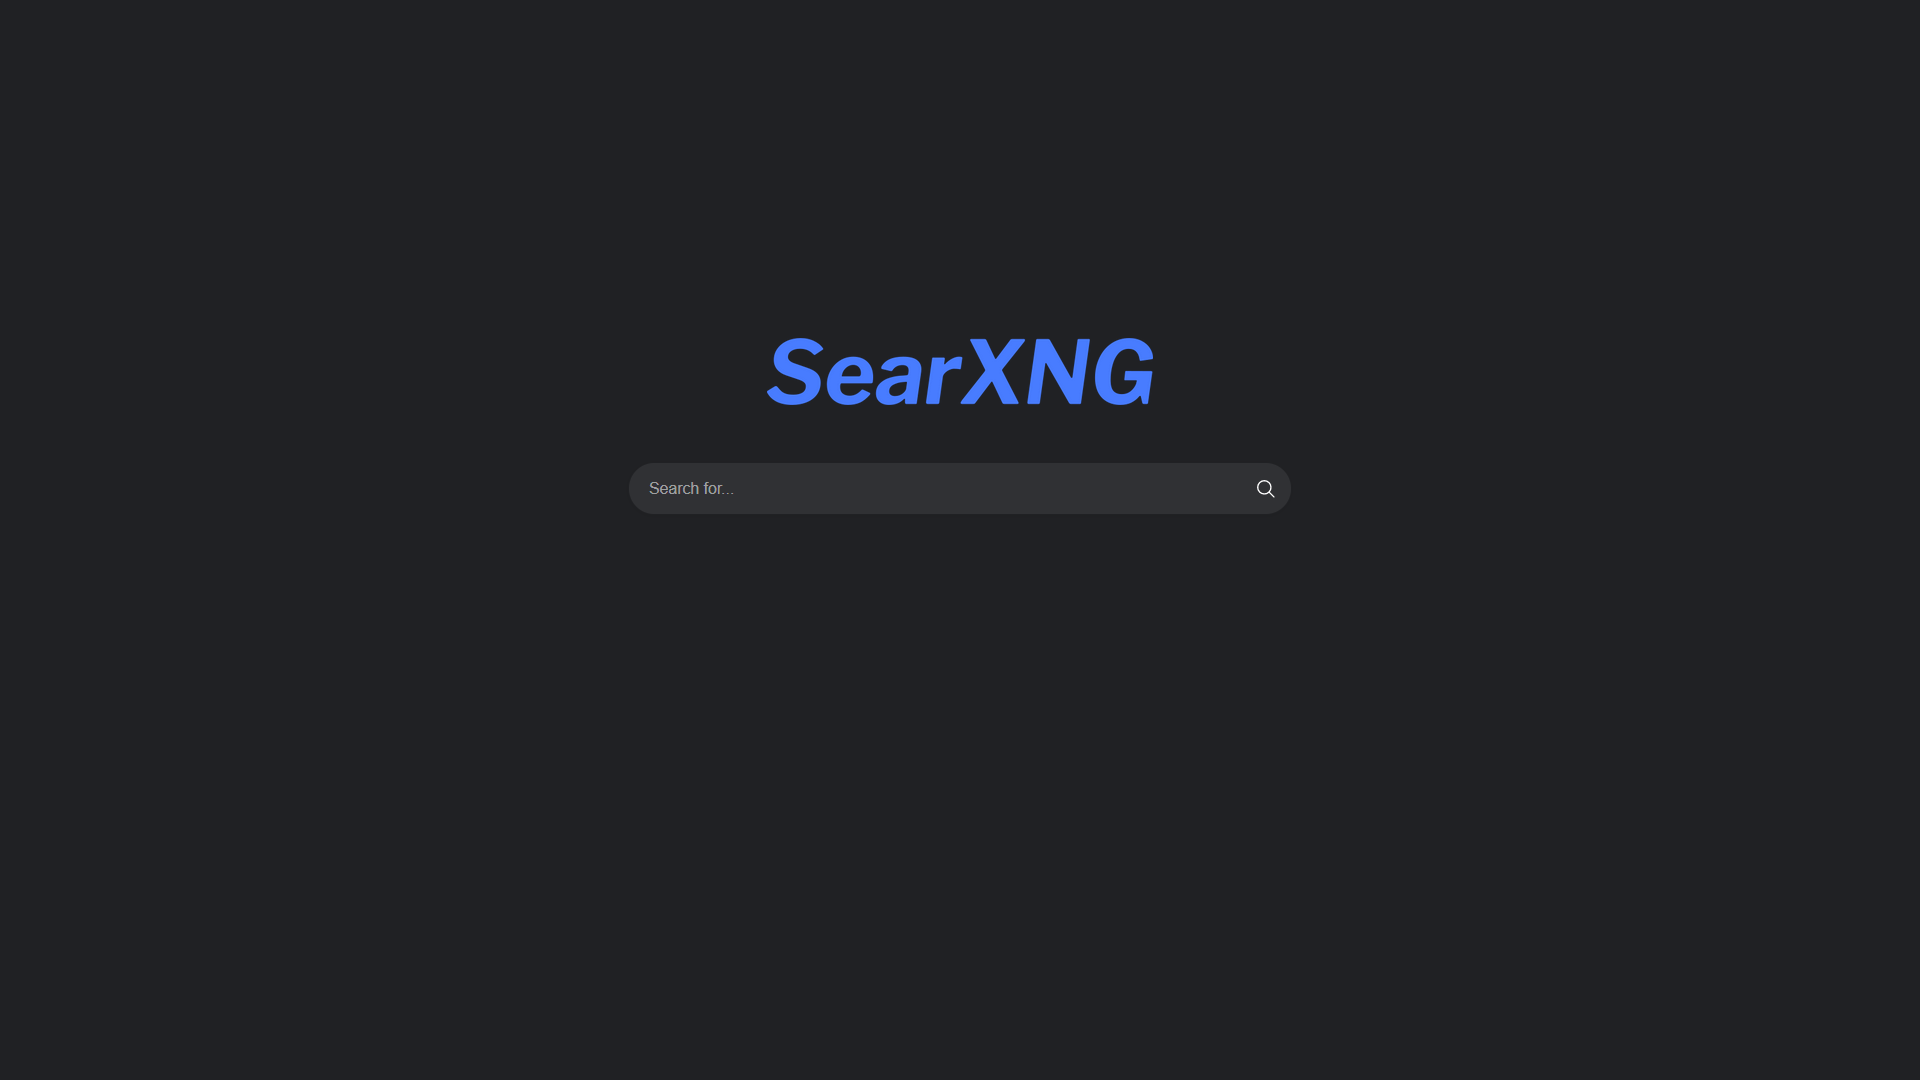 SearXNG Search promo image